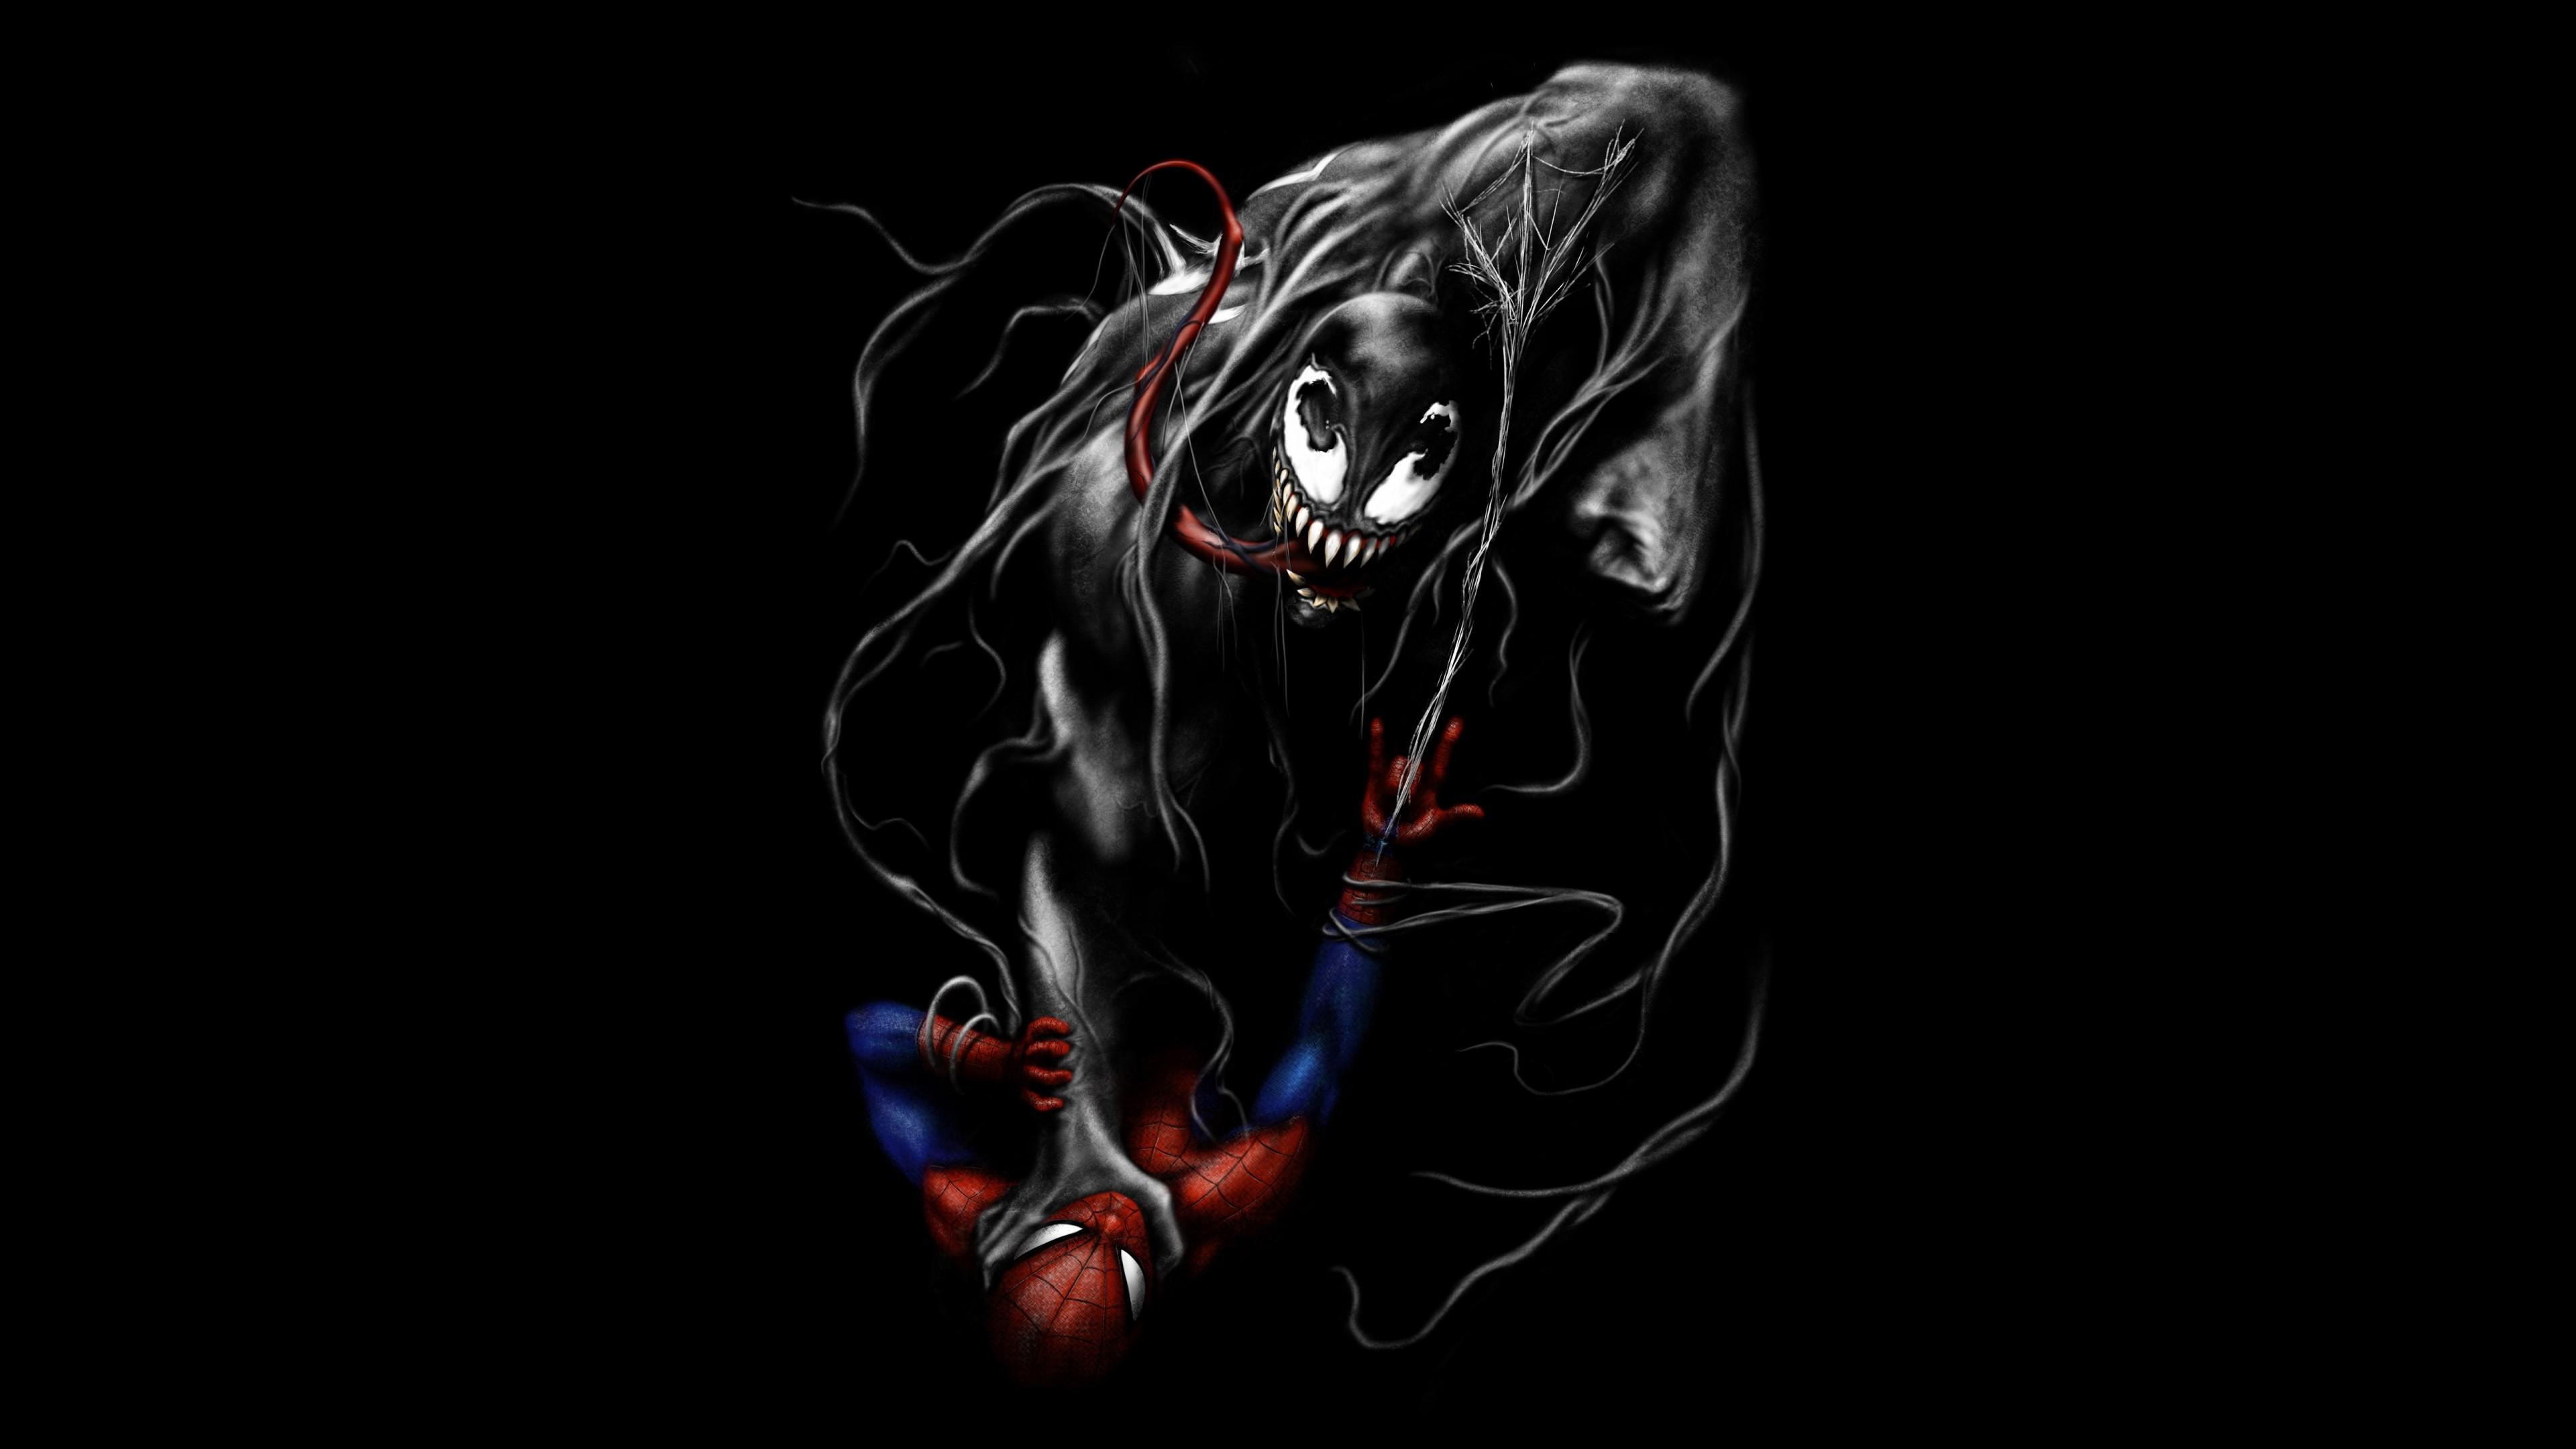 Spider Man Vs Venom 4k Ultra HD Wallpaper. Background Image